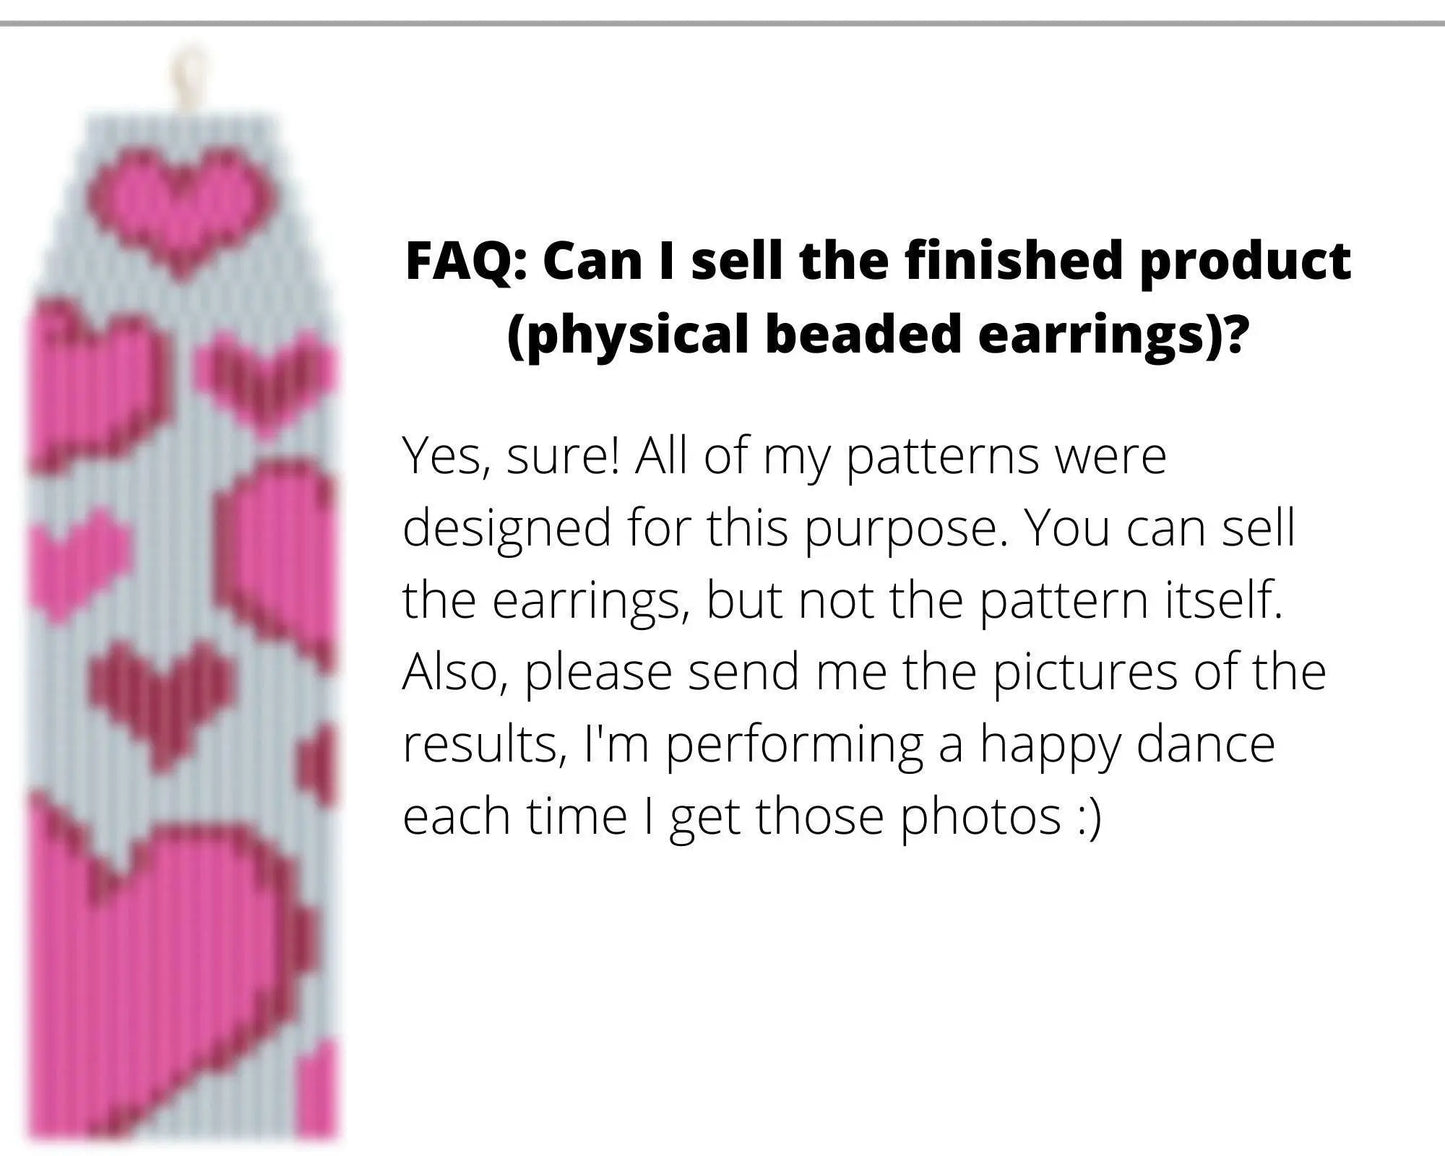 Hearts Brick Stitch pattern for fringe beaded earrings - NikoBeadsUA